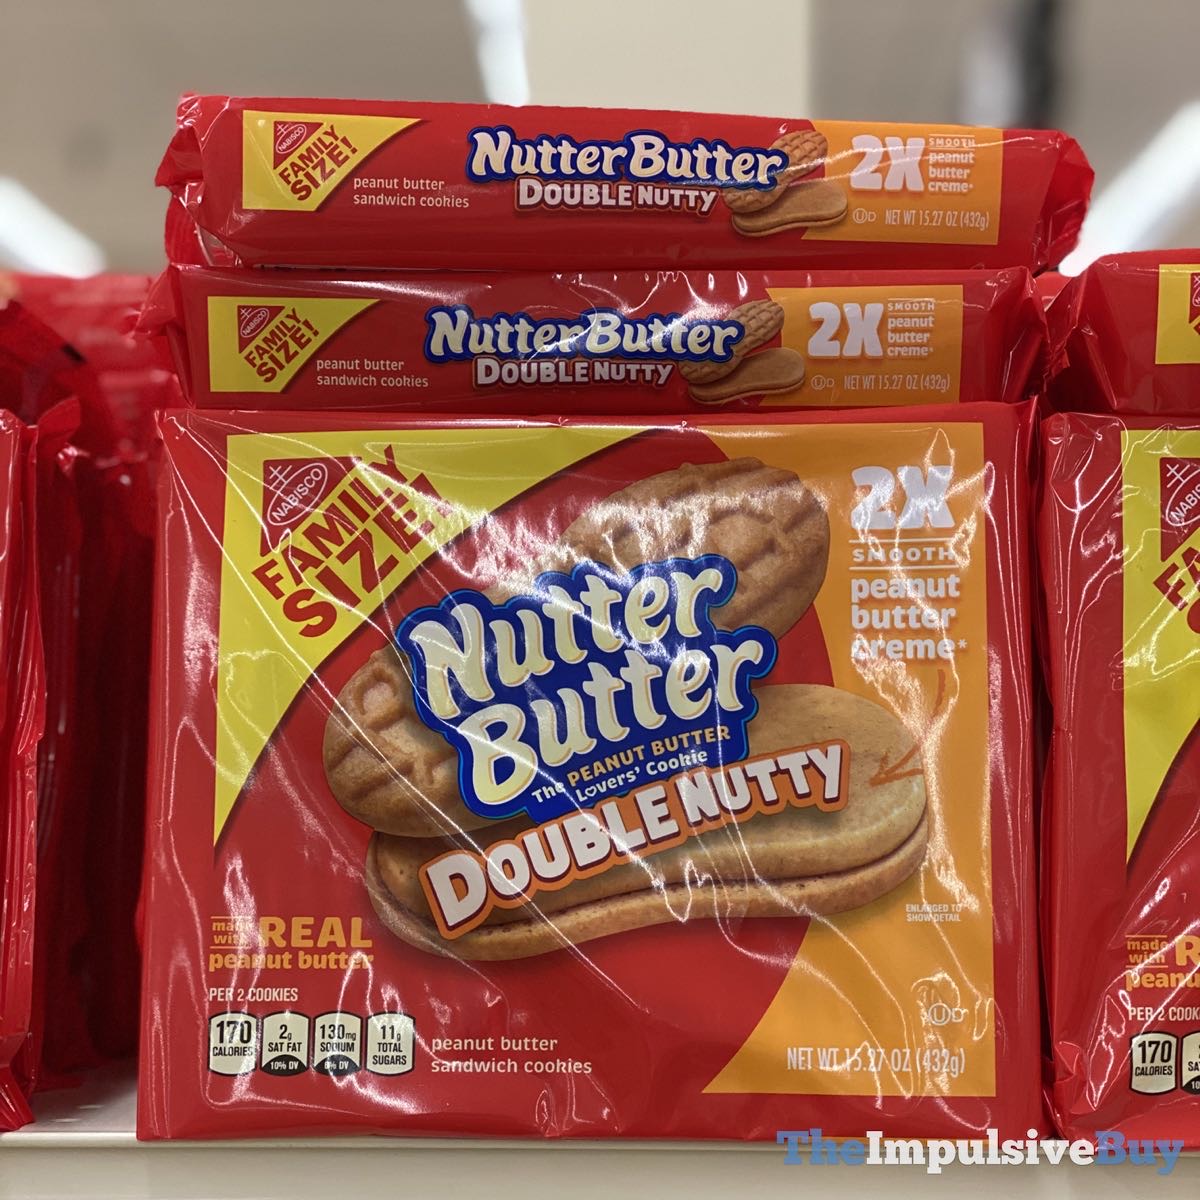 Nutter Butter Double Nutty Peanut Butter Sandwich Cookies, Family